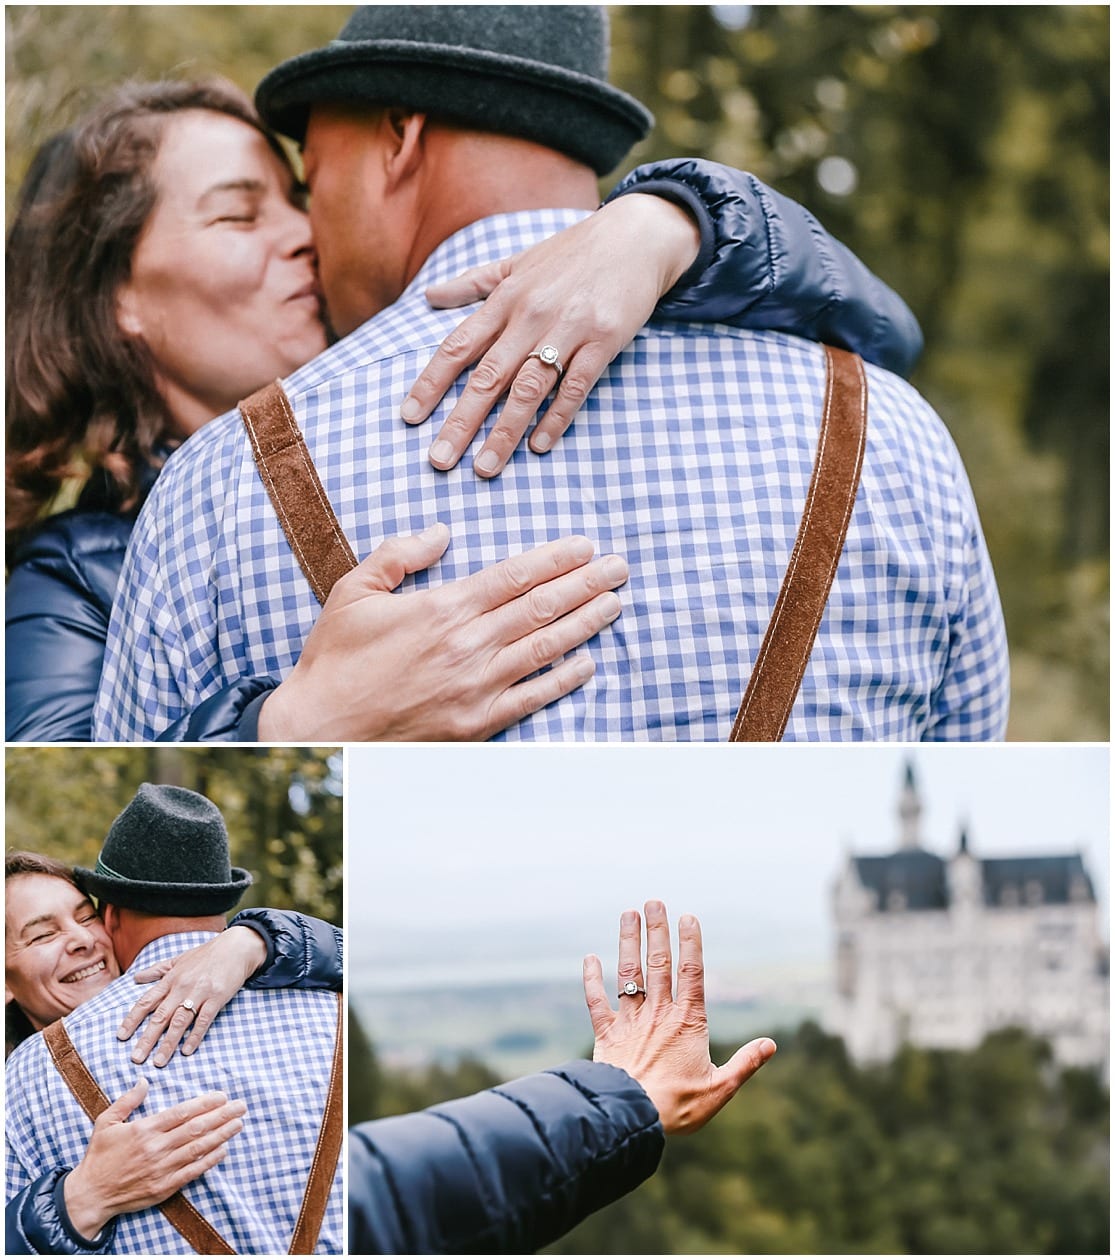 Neuschwanstein Castle Engagement Session and Proposal with Destination Portrait Photographer Helena Woods